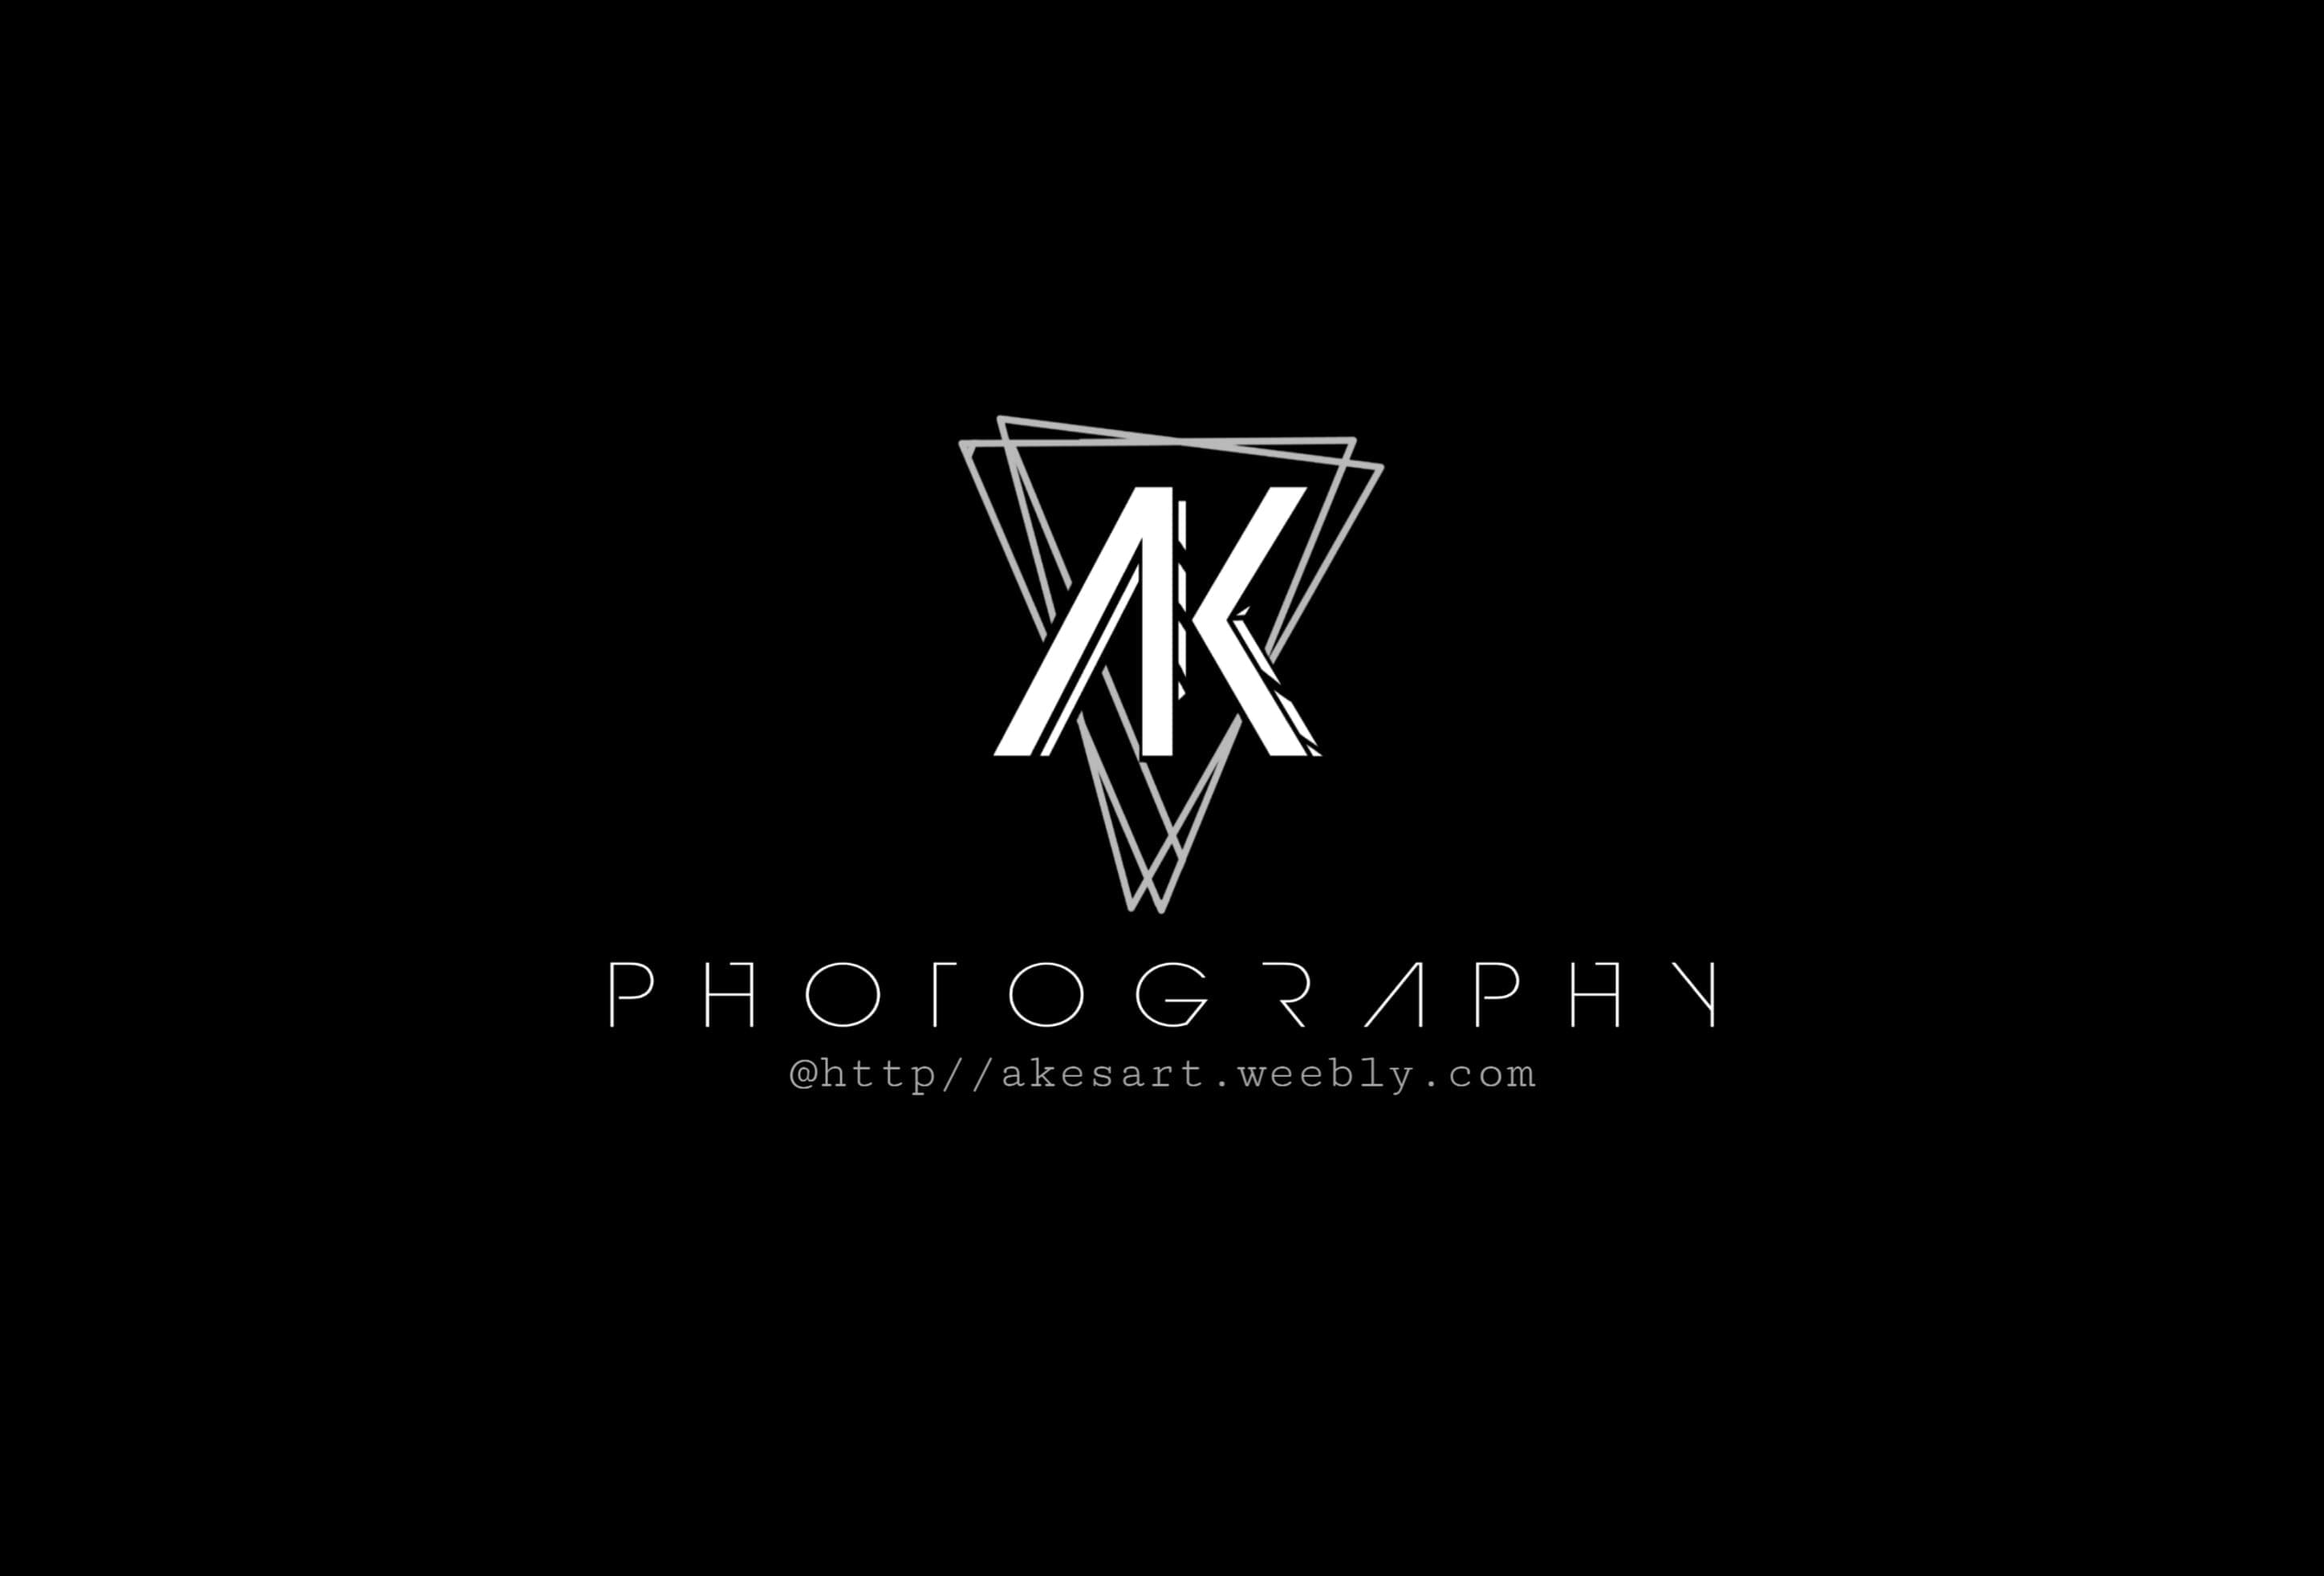 AK Photography & Editing